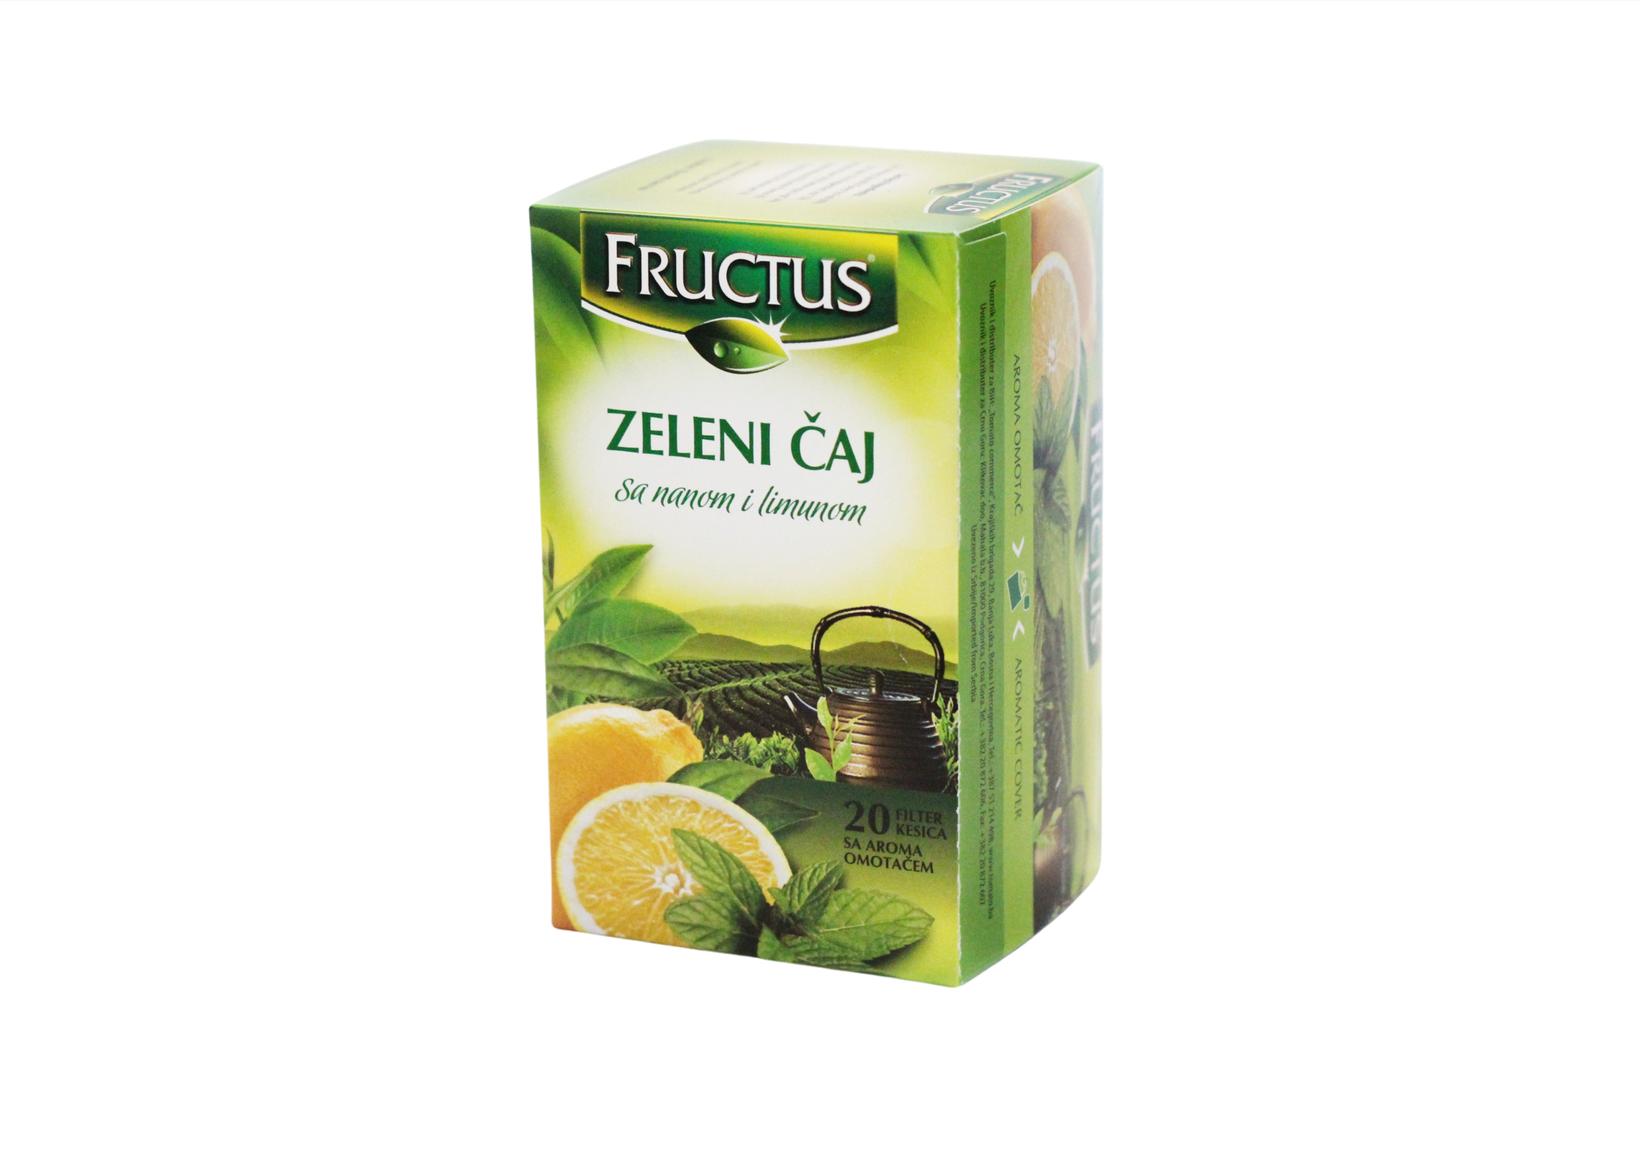 FRUCTUS Zeleni čaj sa nanom i limunom 30g, 20x1.5g